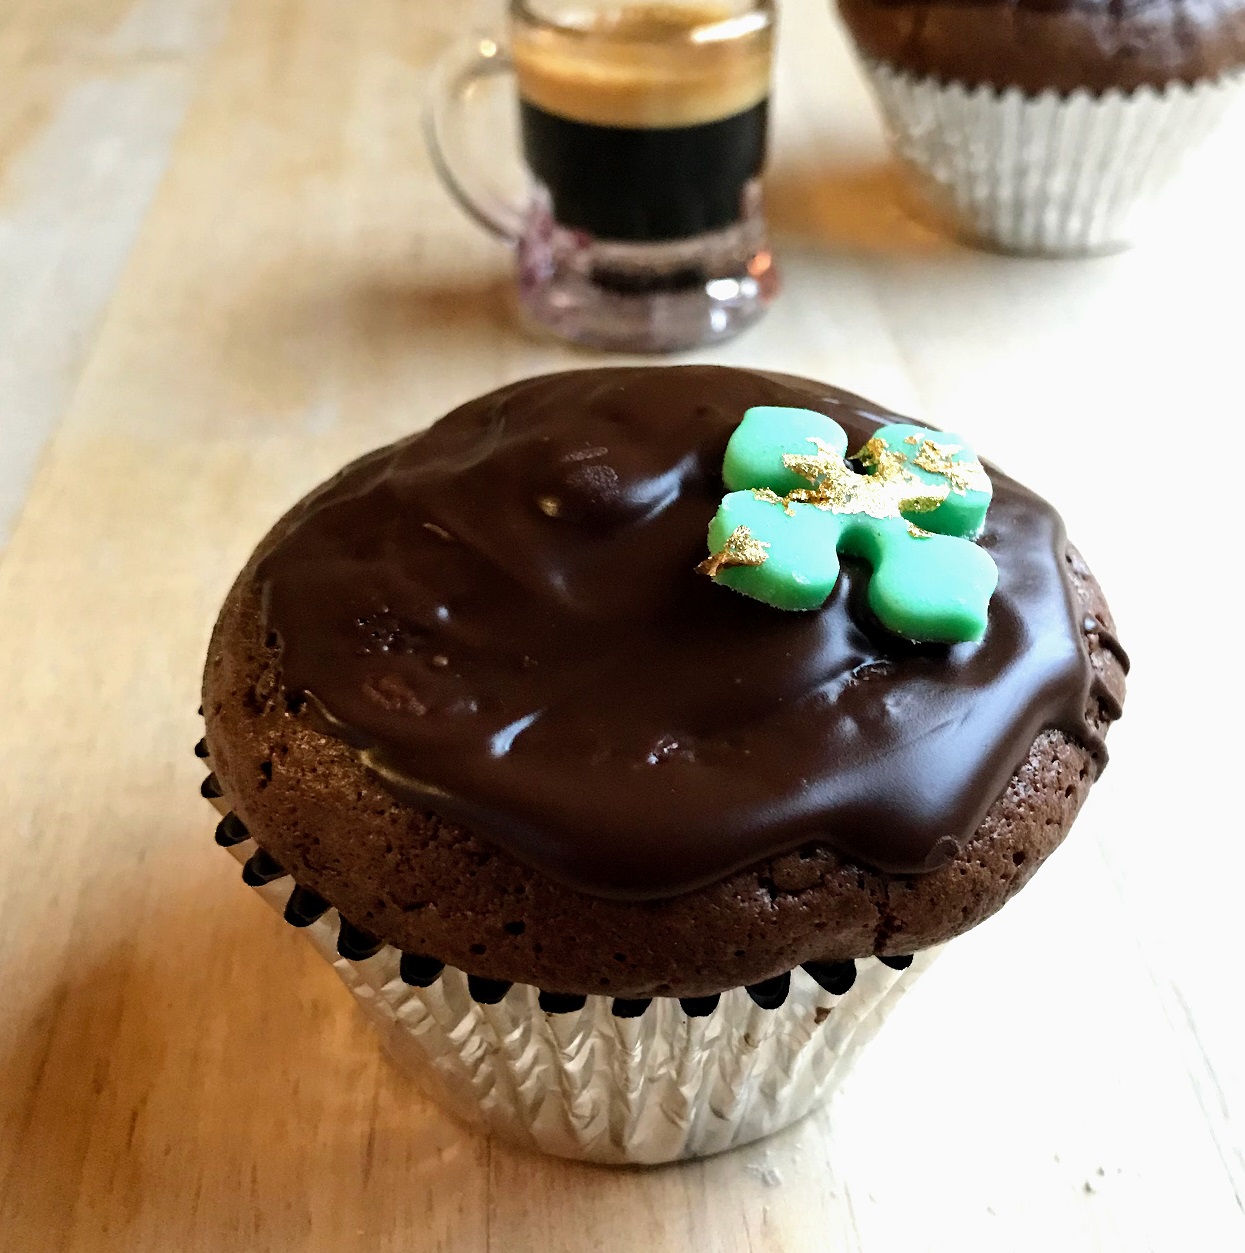 Chocolate Guinness Cupcakes